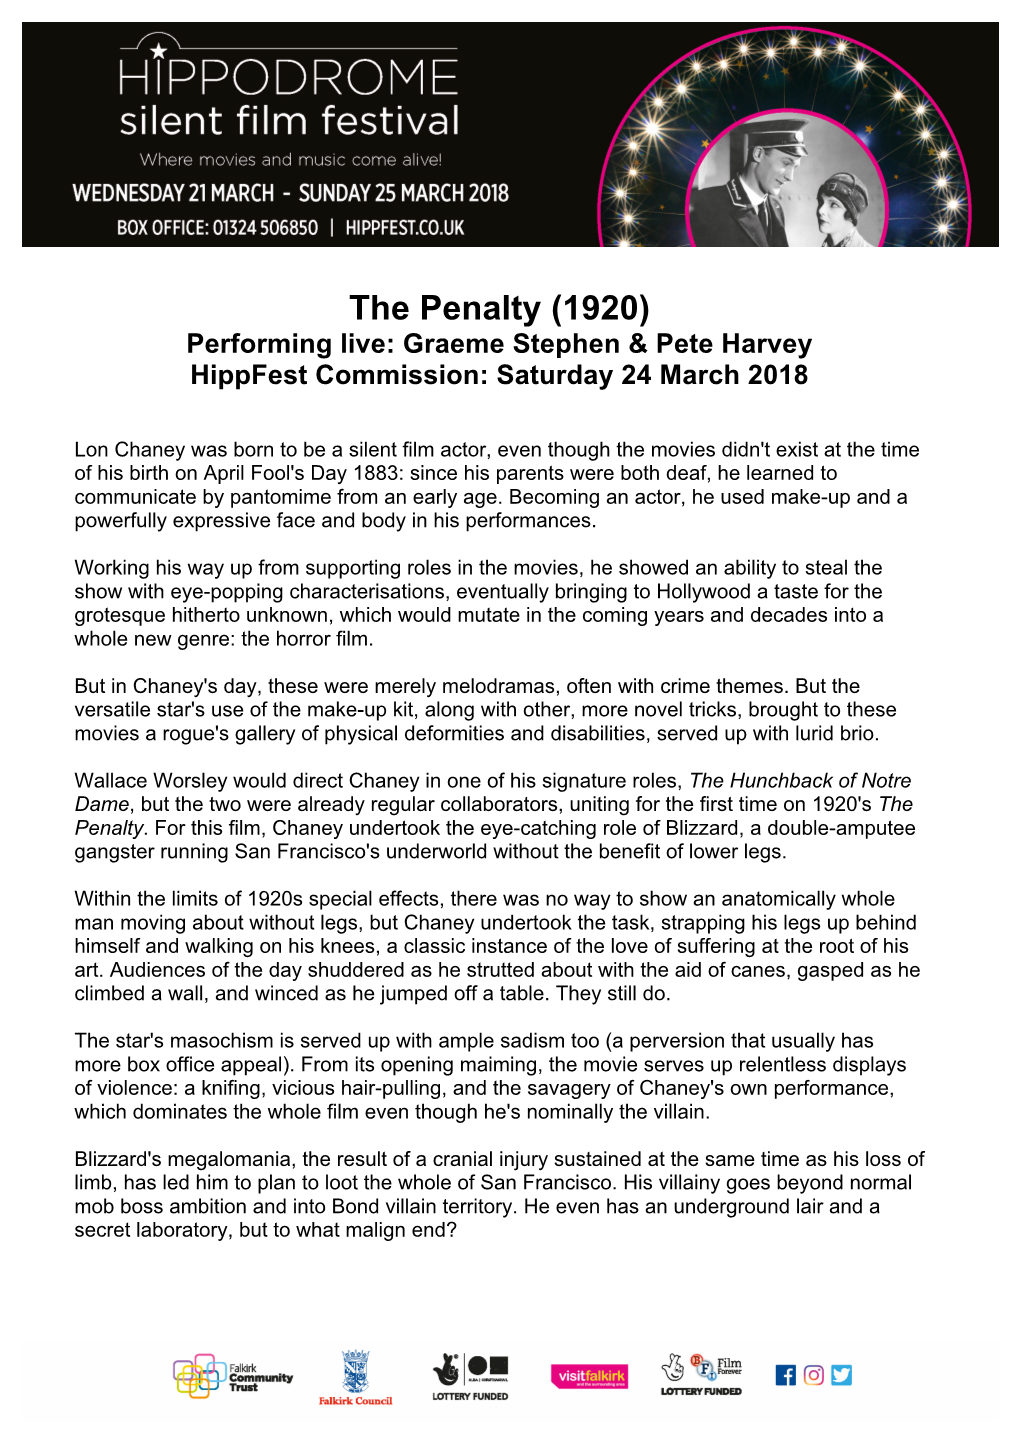 The Penalty (1920) Performing Live: Graeme Stephen & Pete Harvey Hippfest Commission: Saturday 24 March 2018